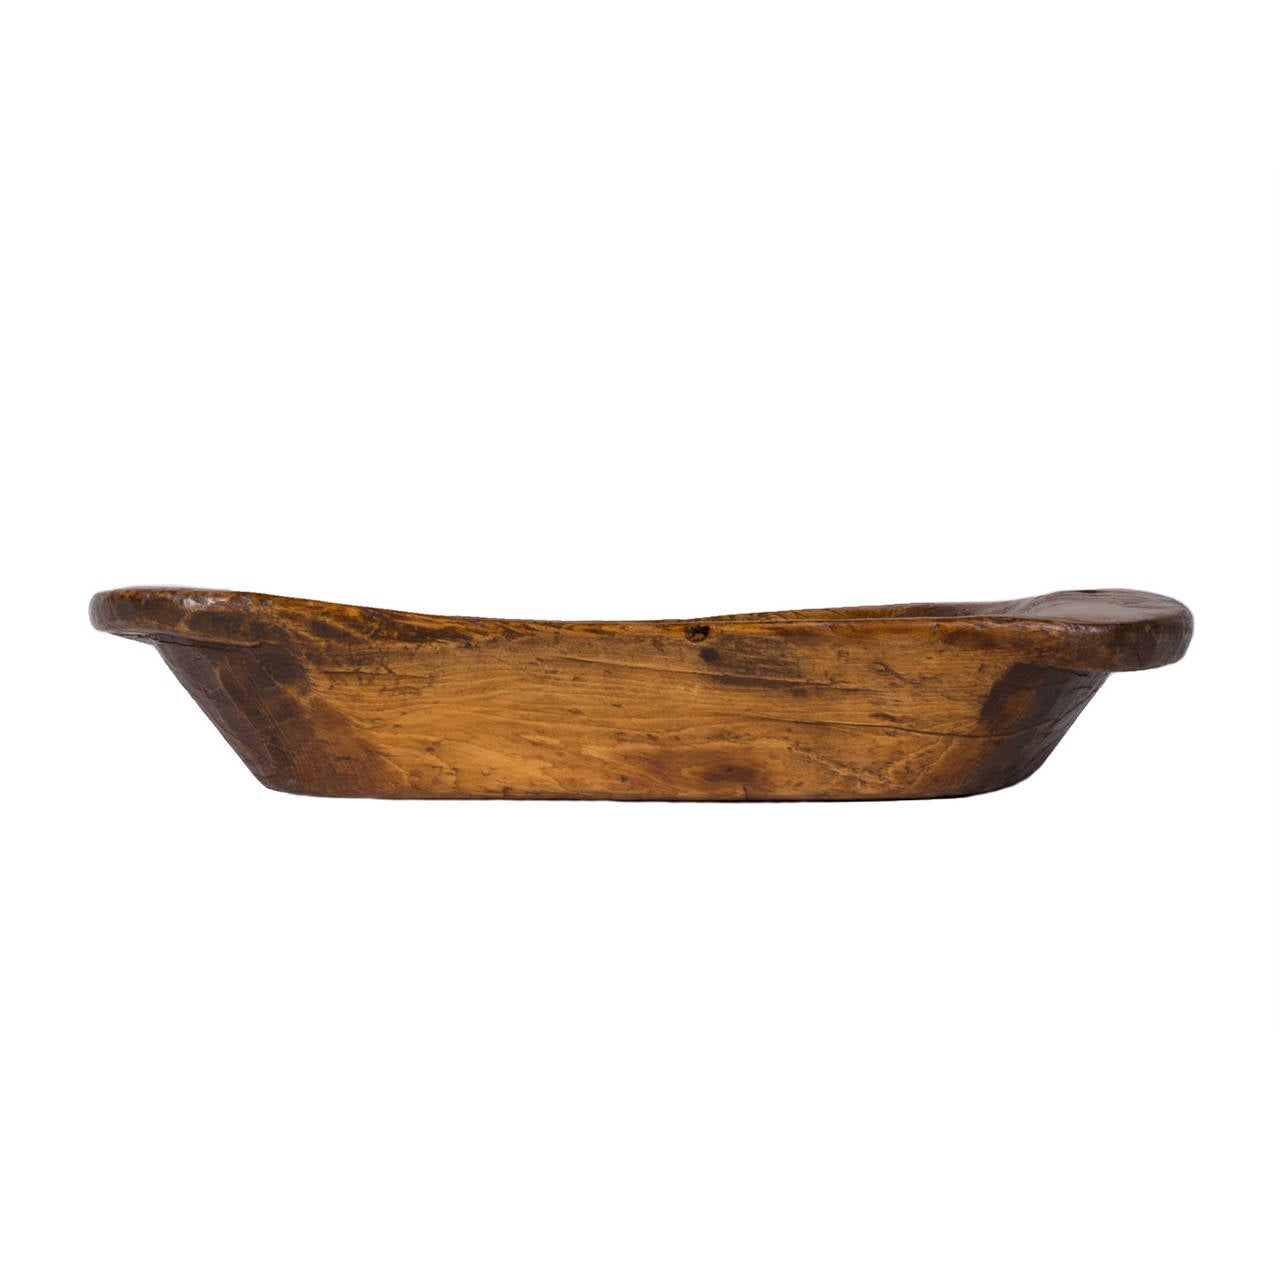 Yumu hat form folk tray carved from a single piece of wood.